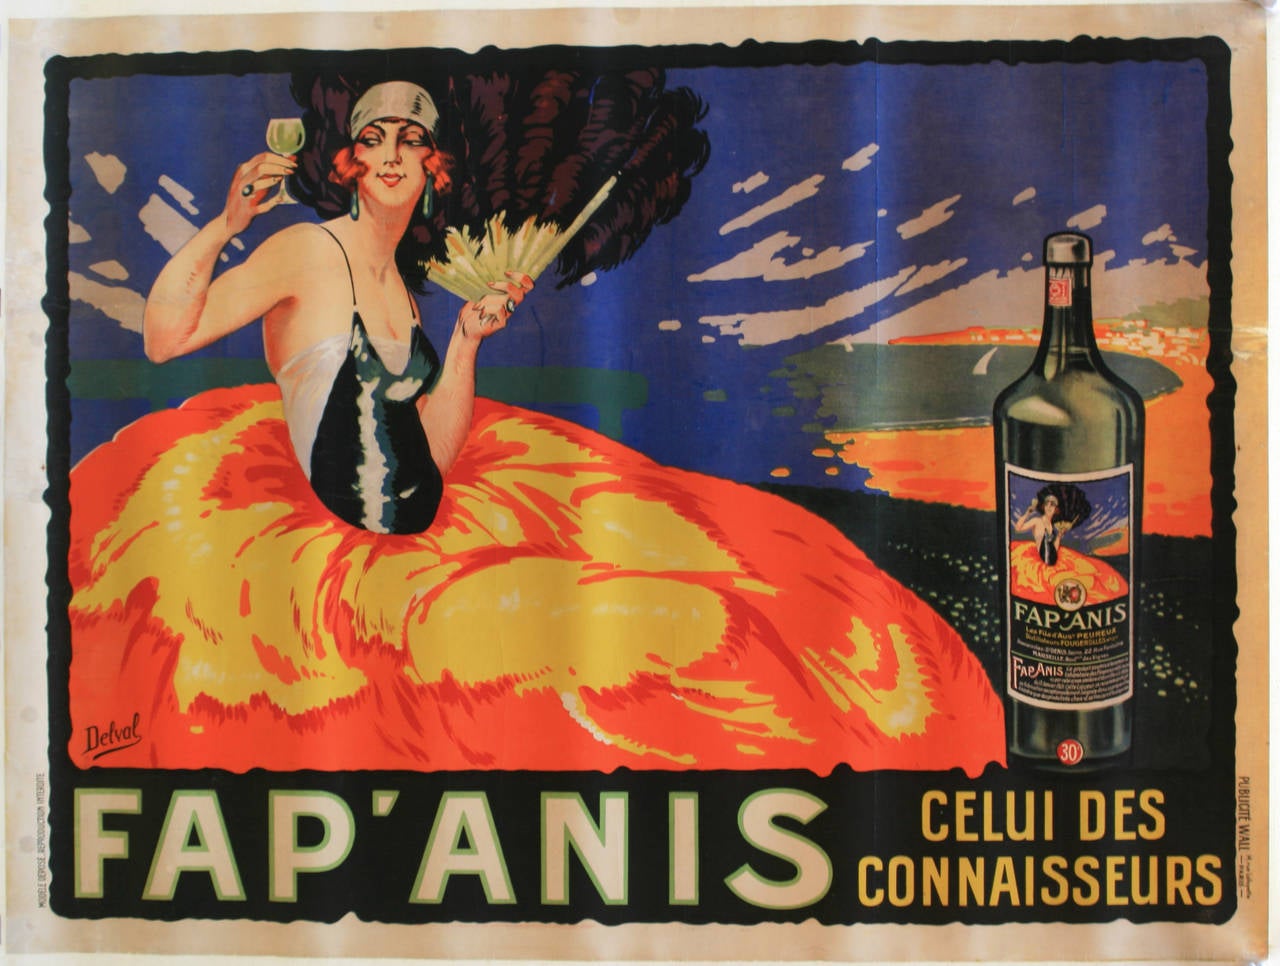 Delval Print - Large Horizontal Original Vintage 1930s Drink Advertising Poster For Fap'Anis